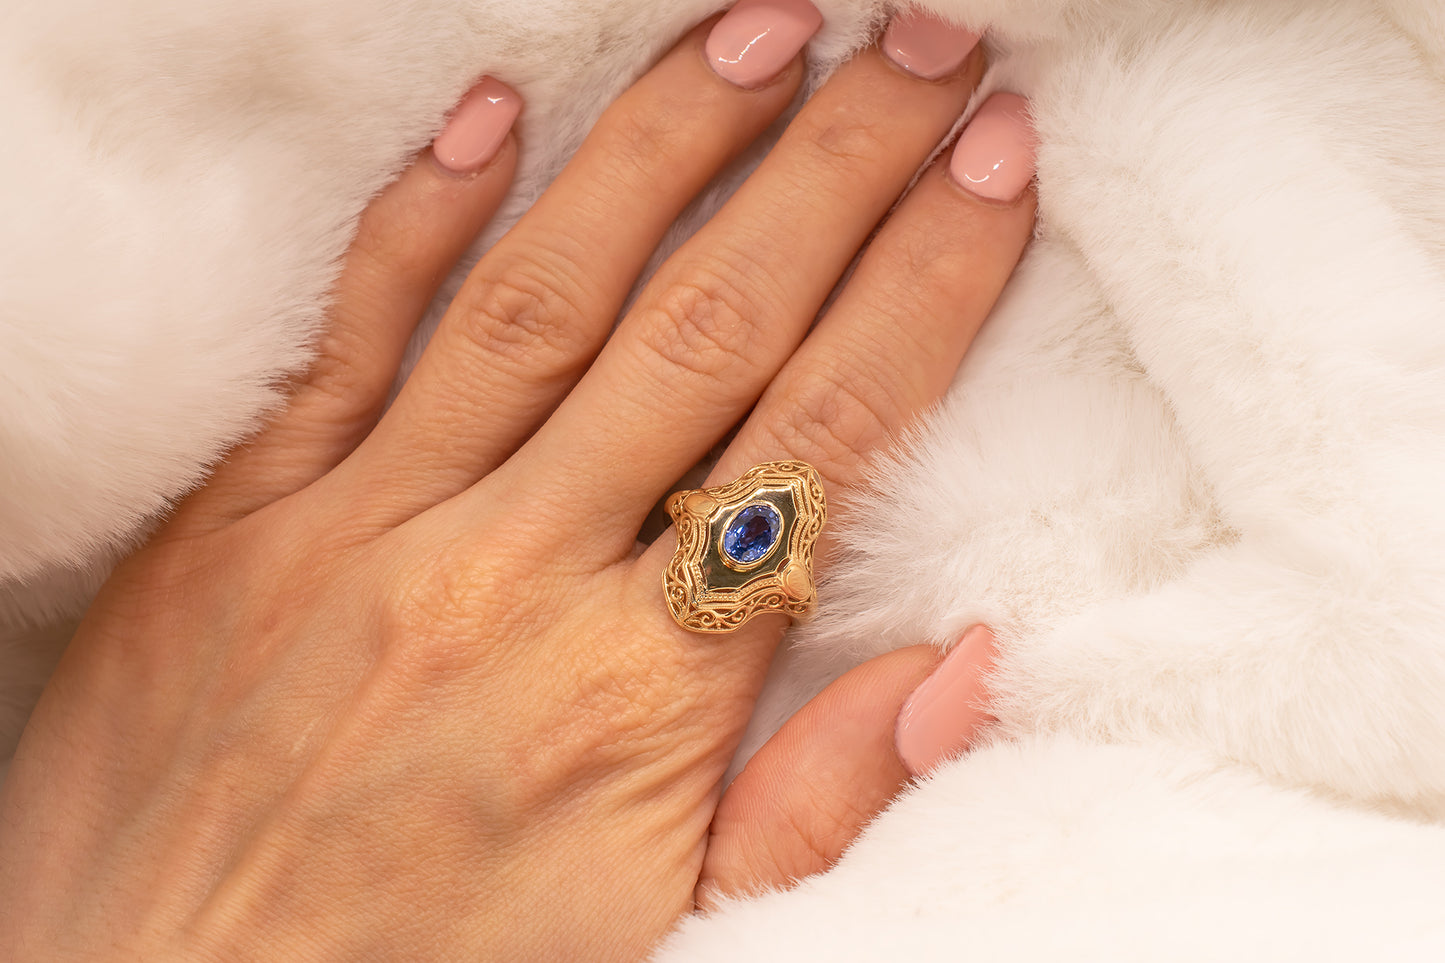 Vintage 14k Yellow Gold Blue Sapphire Edwardian Style Ornate Ring